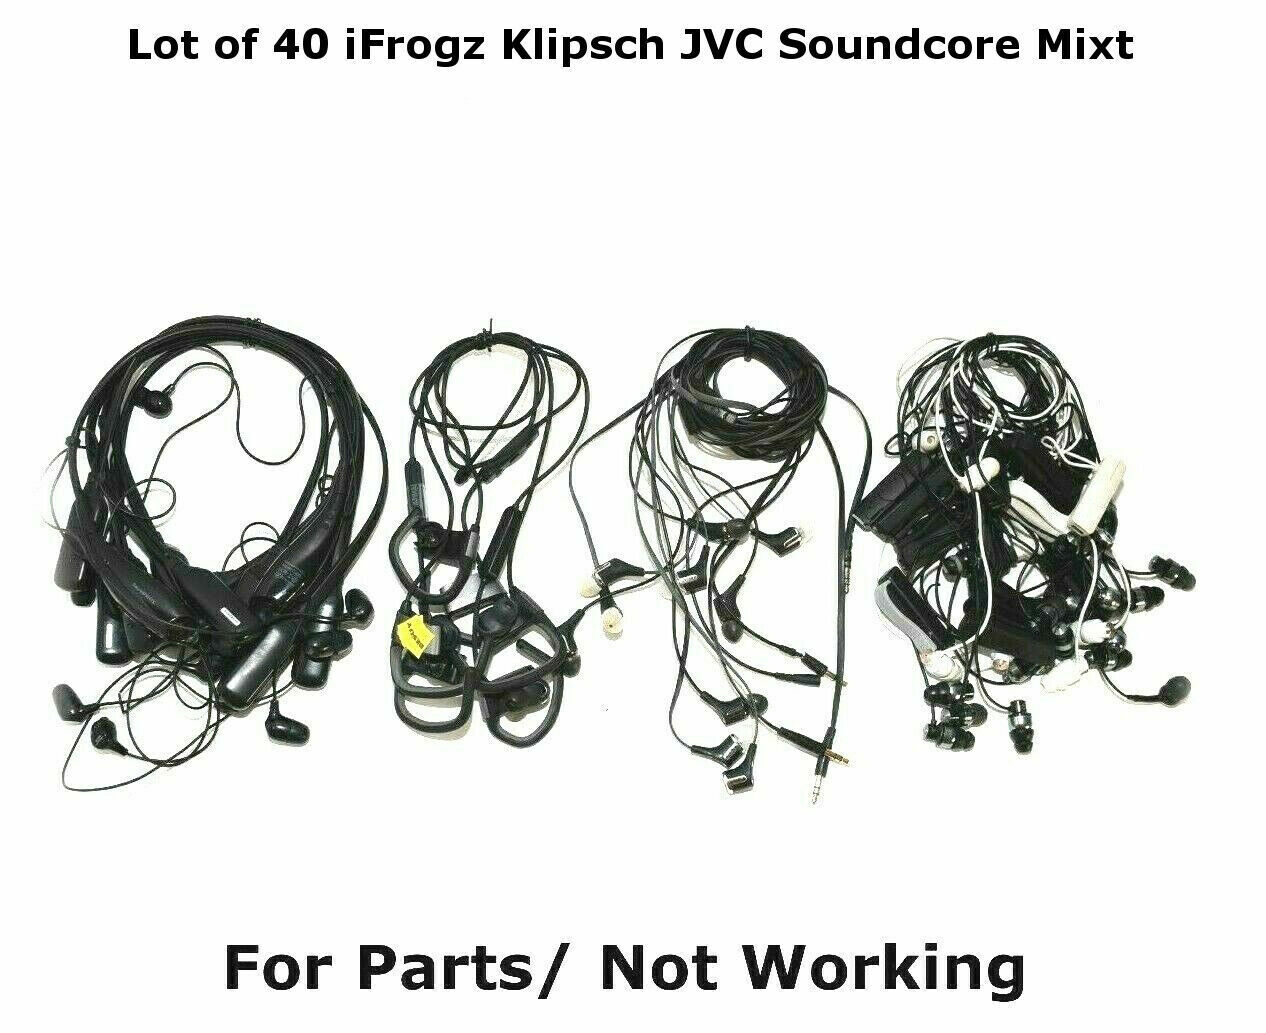 Lot of 40 iFrogz Klipsch JVC Soundcore Mixt Headphones For Parts/ Not Working